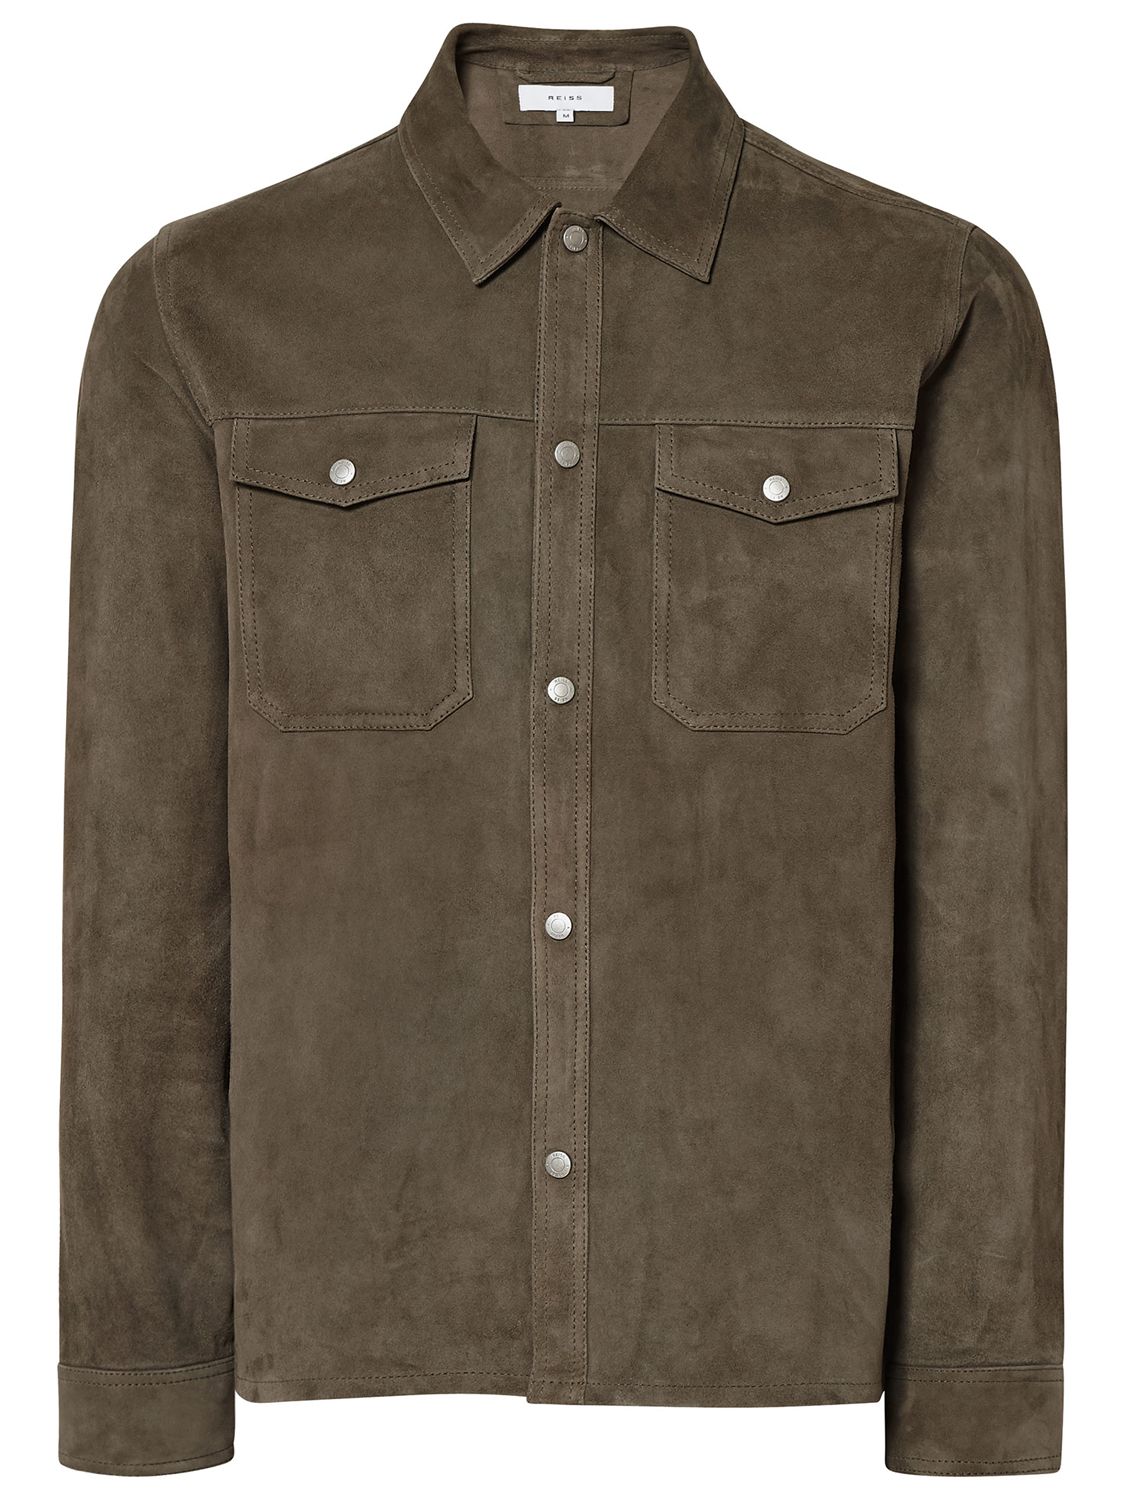 Reiss Mick Suede Overshirt Jacket, Grey at John Lewis & Partners